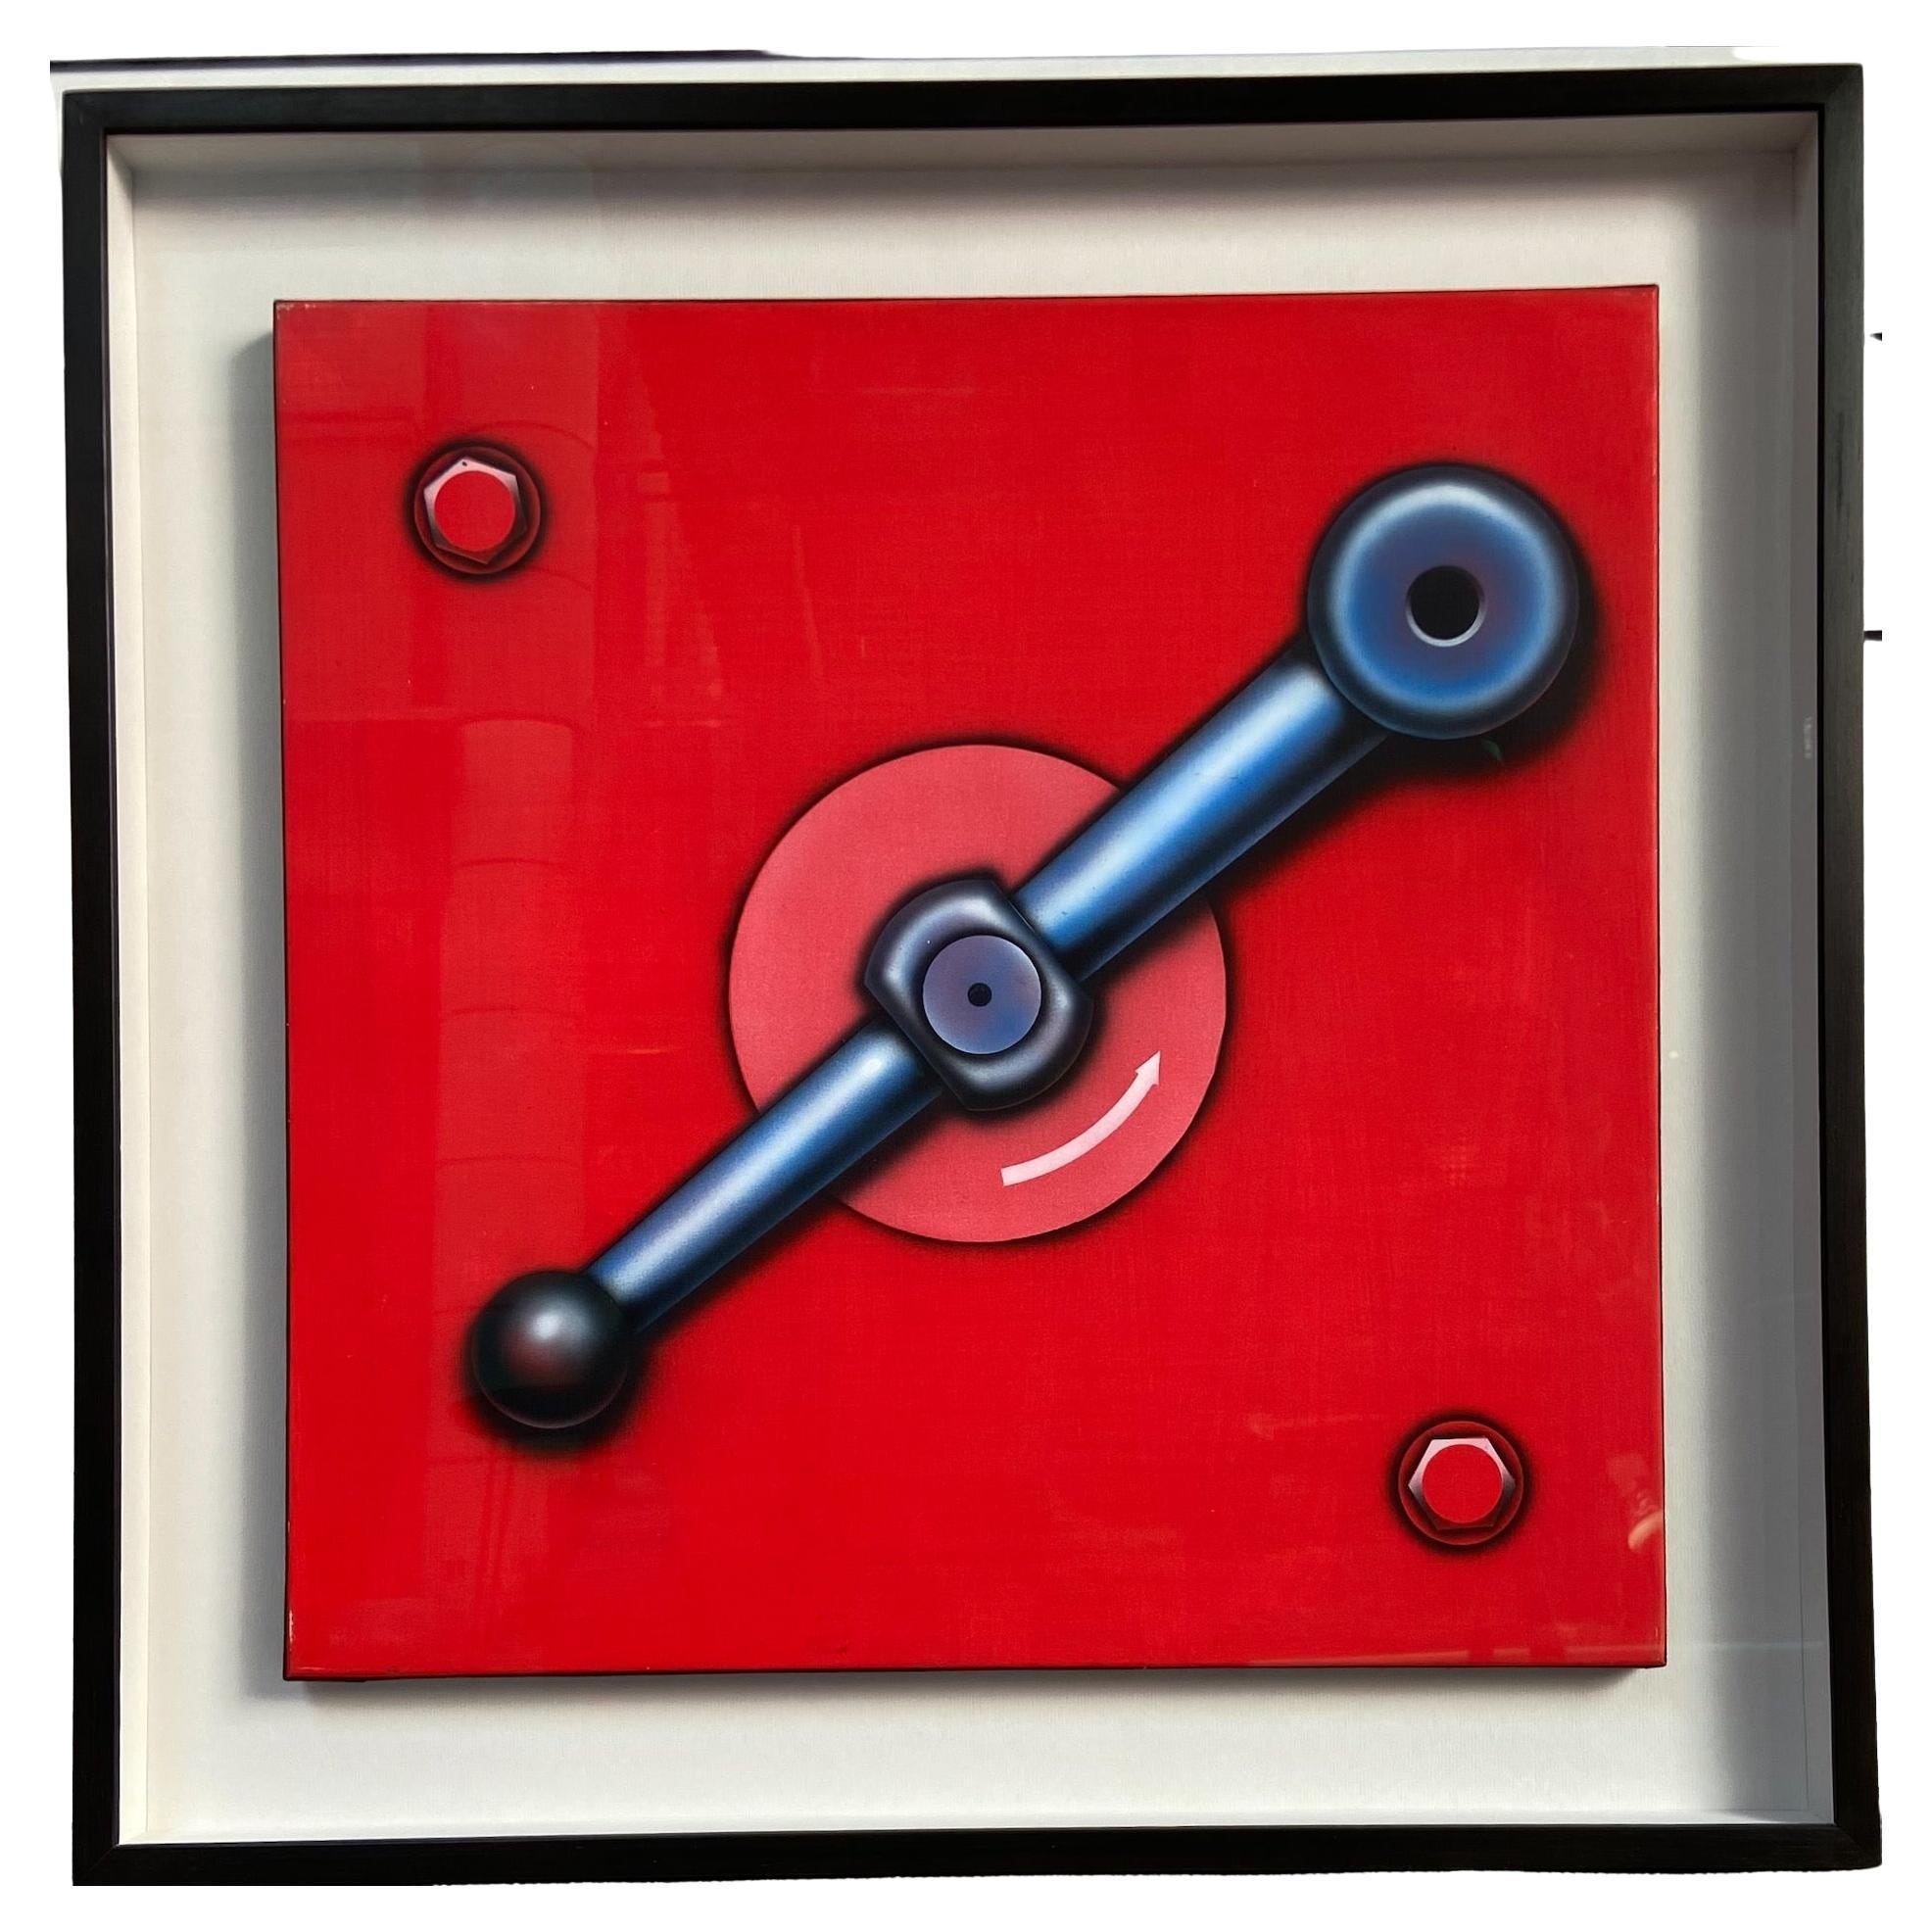 Lock on Red Background, Peter Klasen